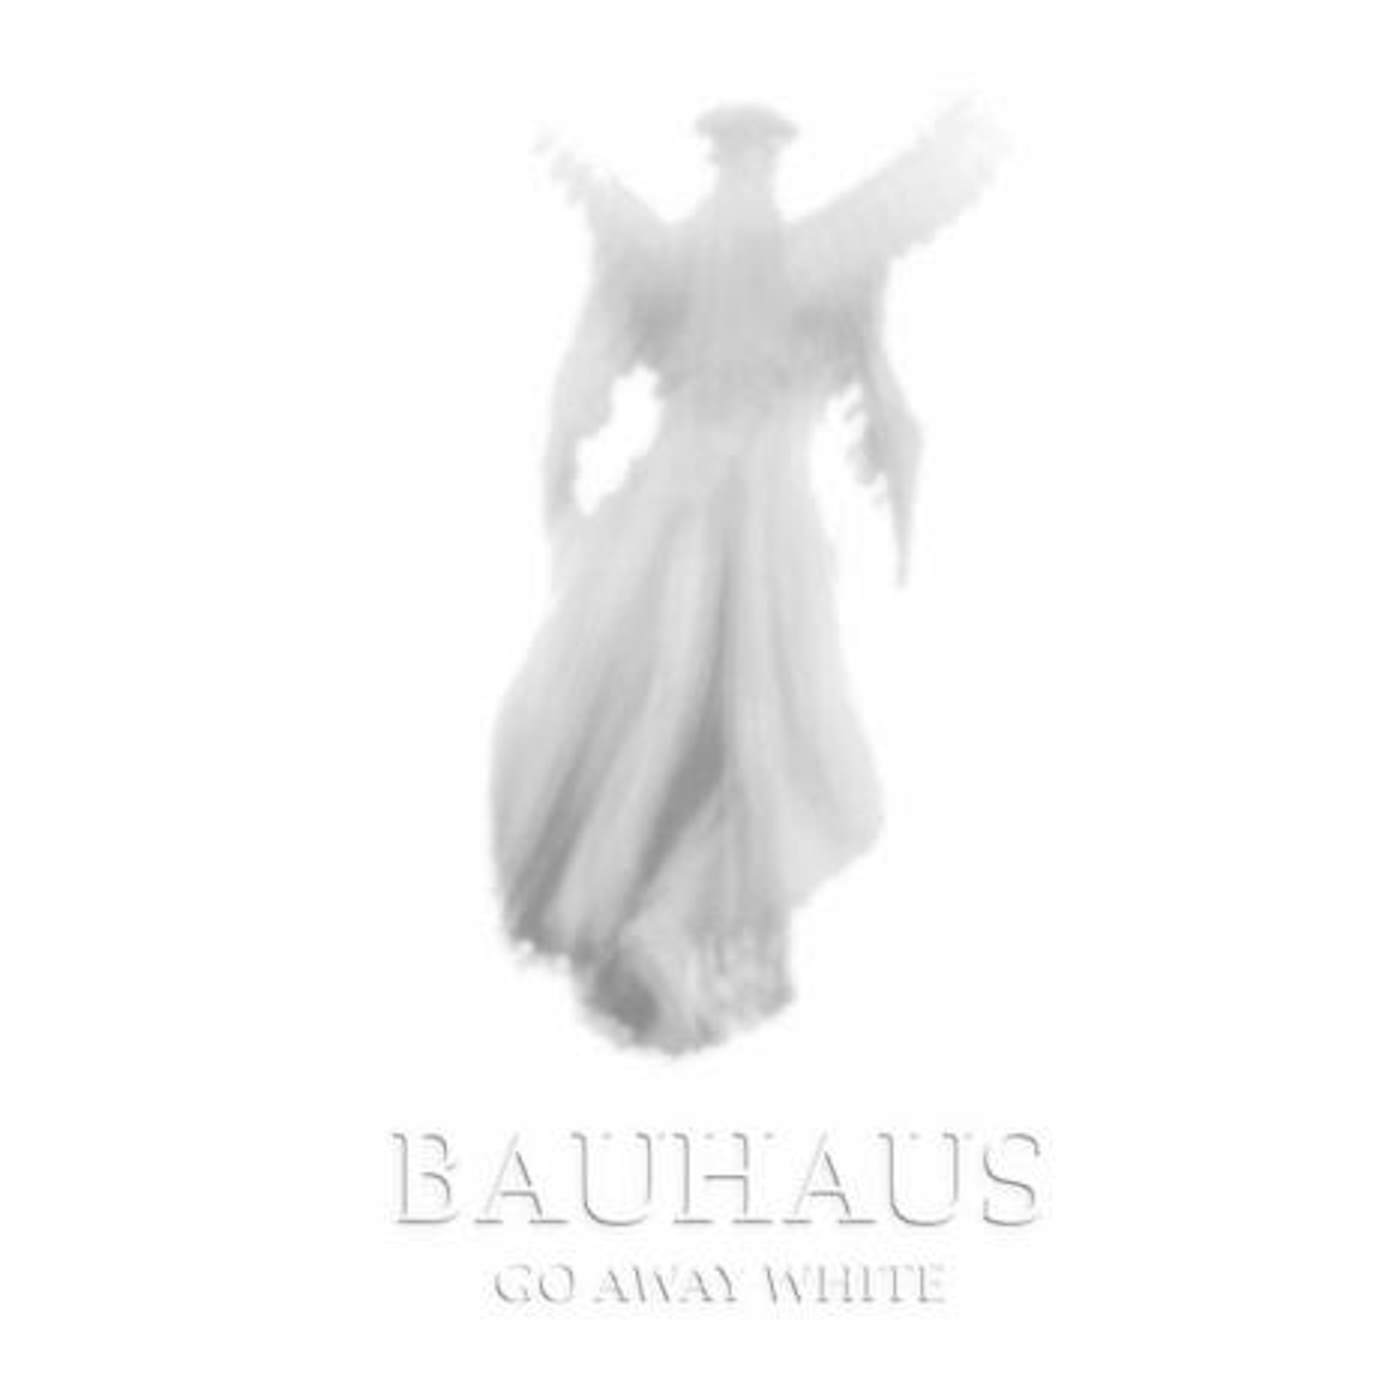 Bauhaus GO AWAY WHITE CD